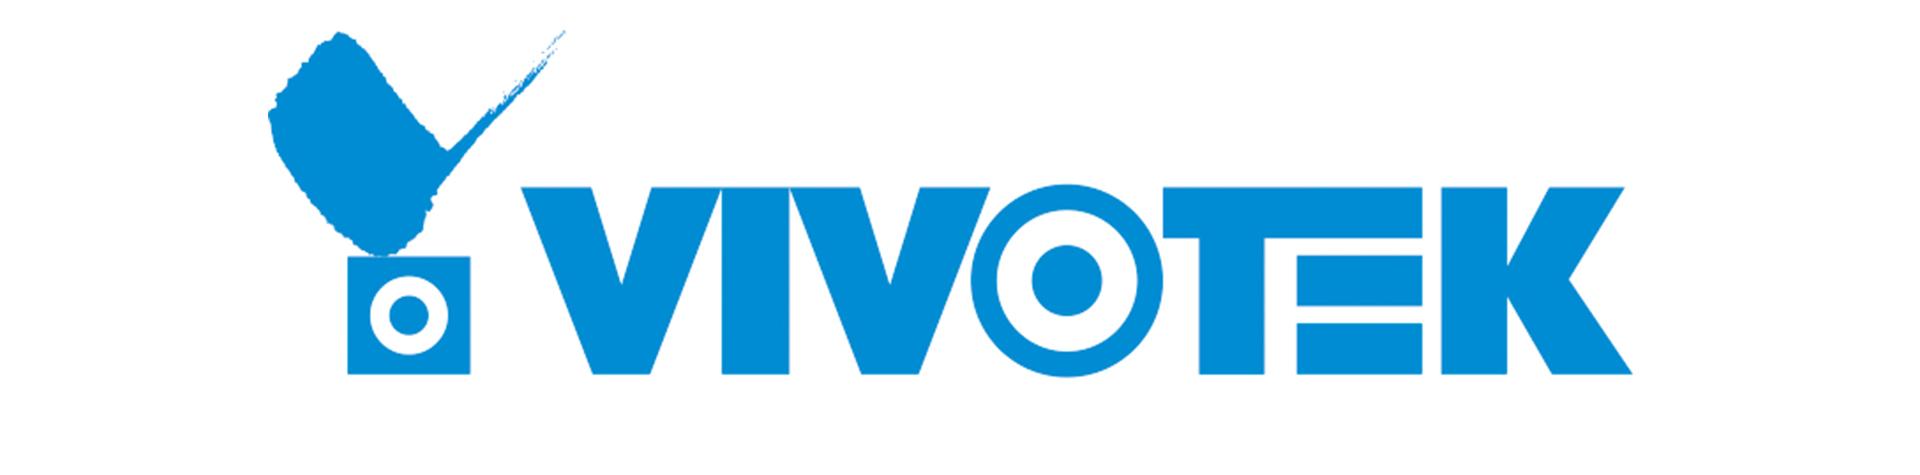 VIVOTEK Logo - Security & Surveillance Products - VIVOTEK Distributor | SMC Electric